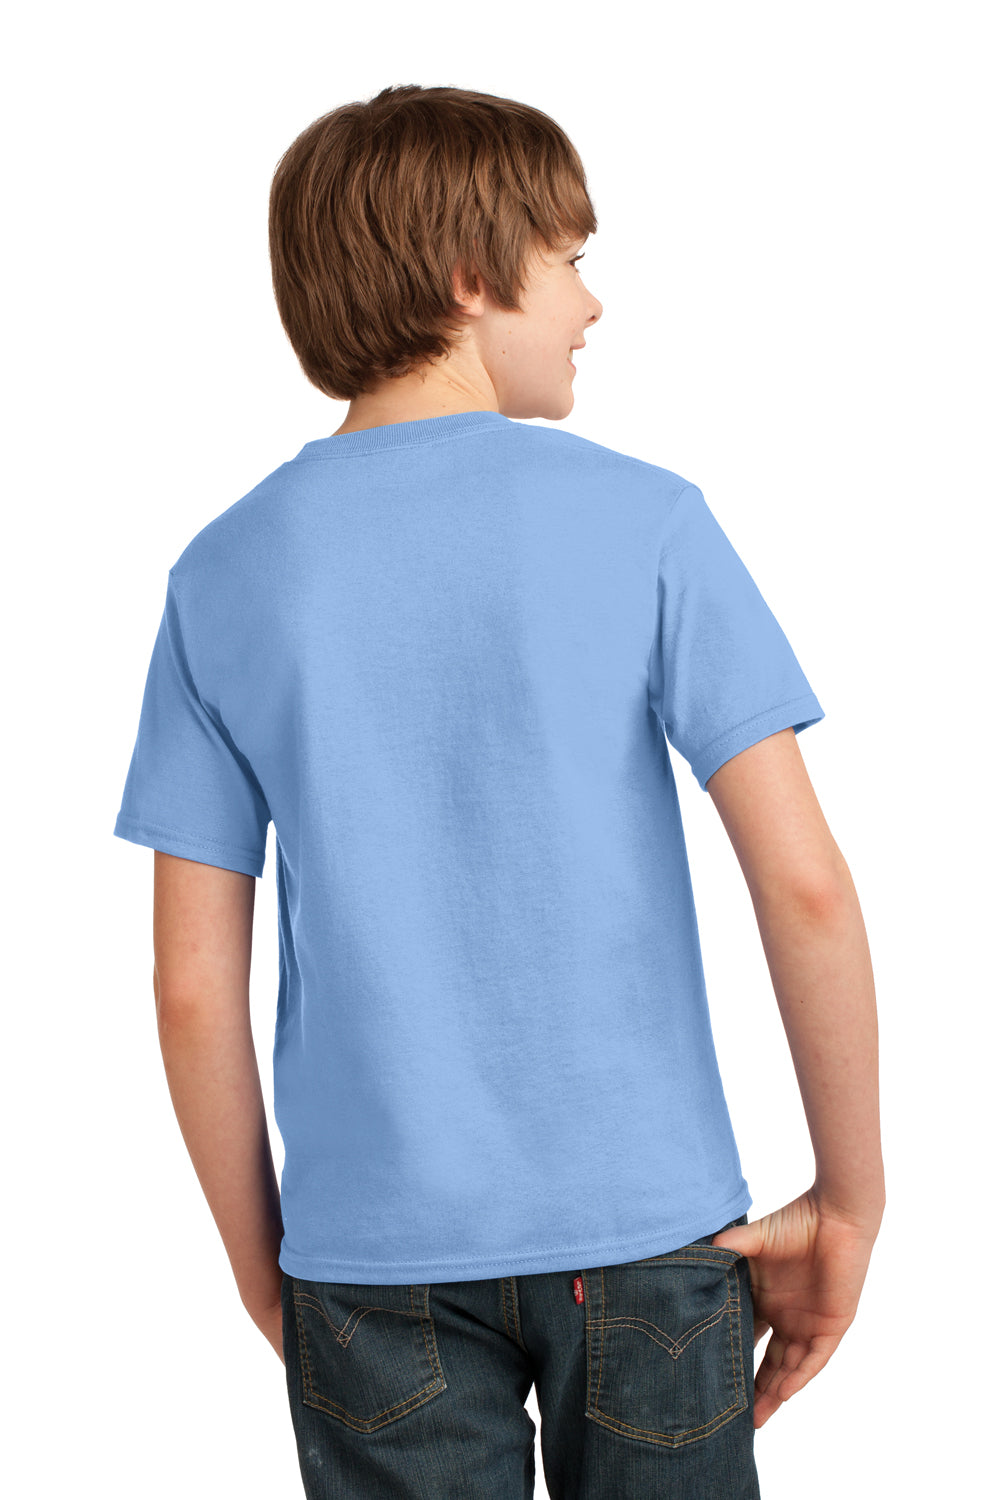 Port & Company PC61Y Youth Essential Short Sleeve Crewneck T-Shirt Light Blue Back